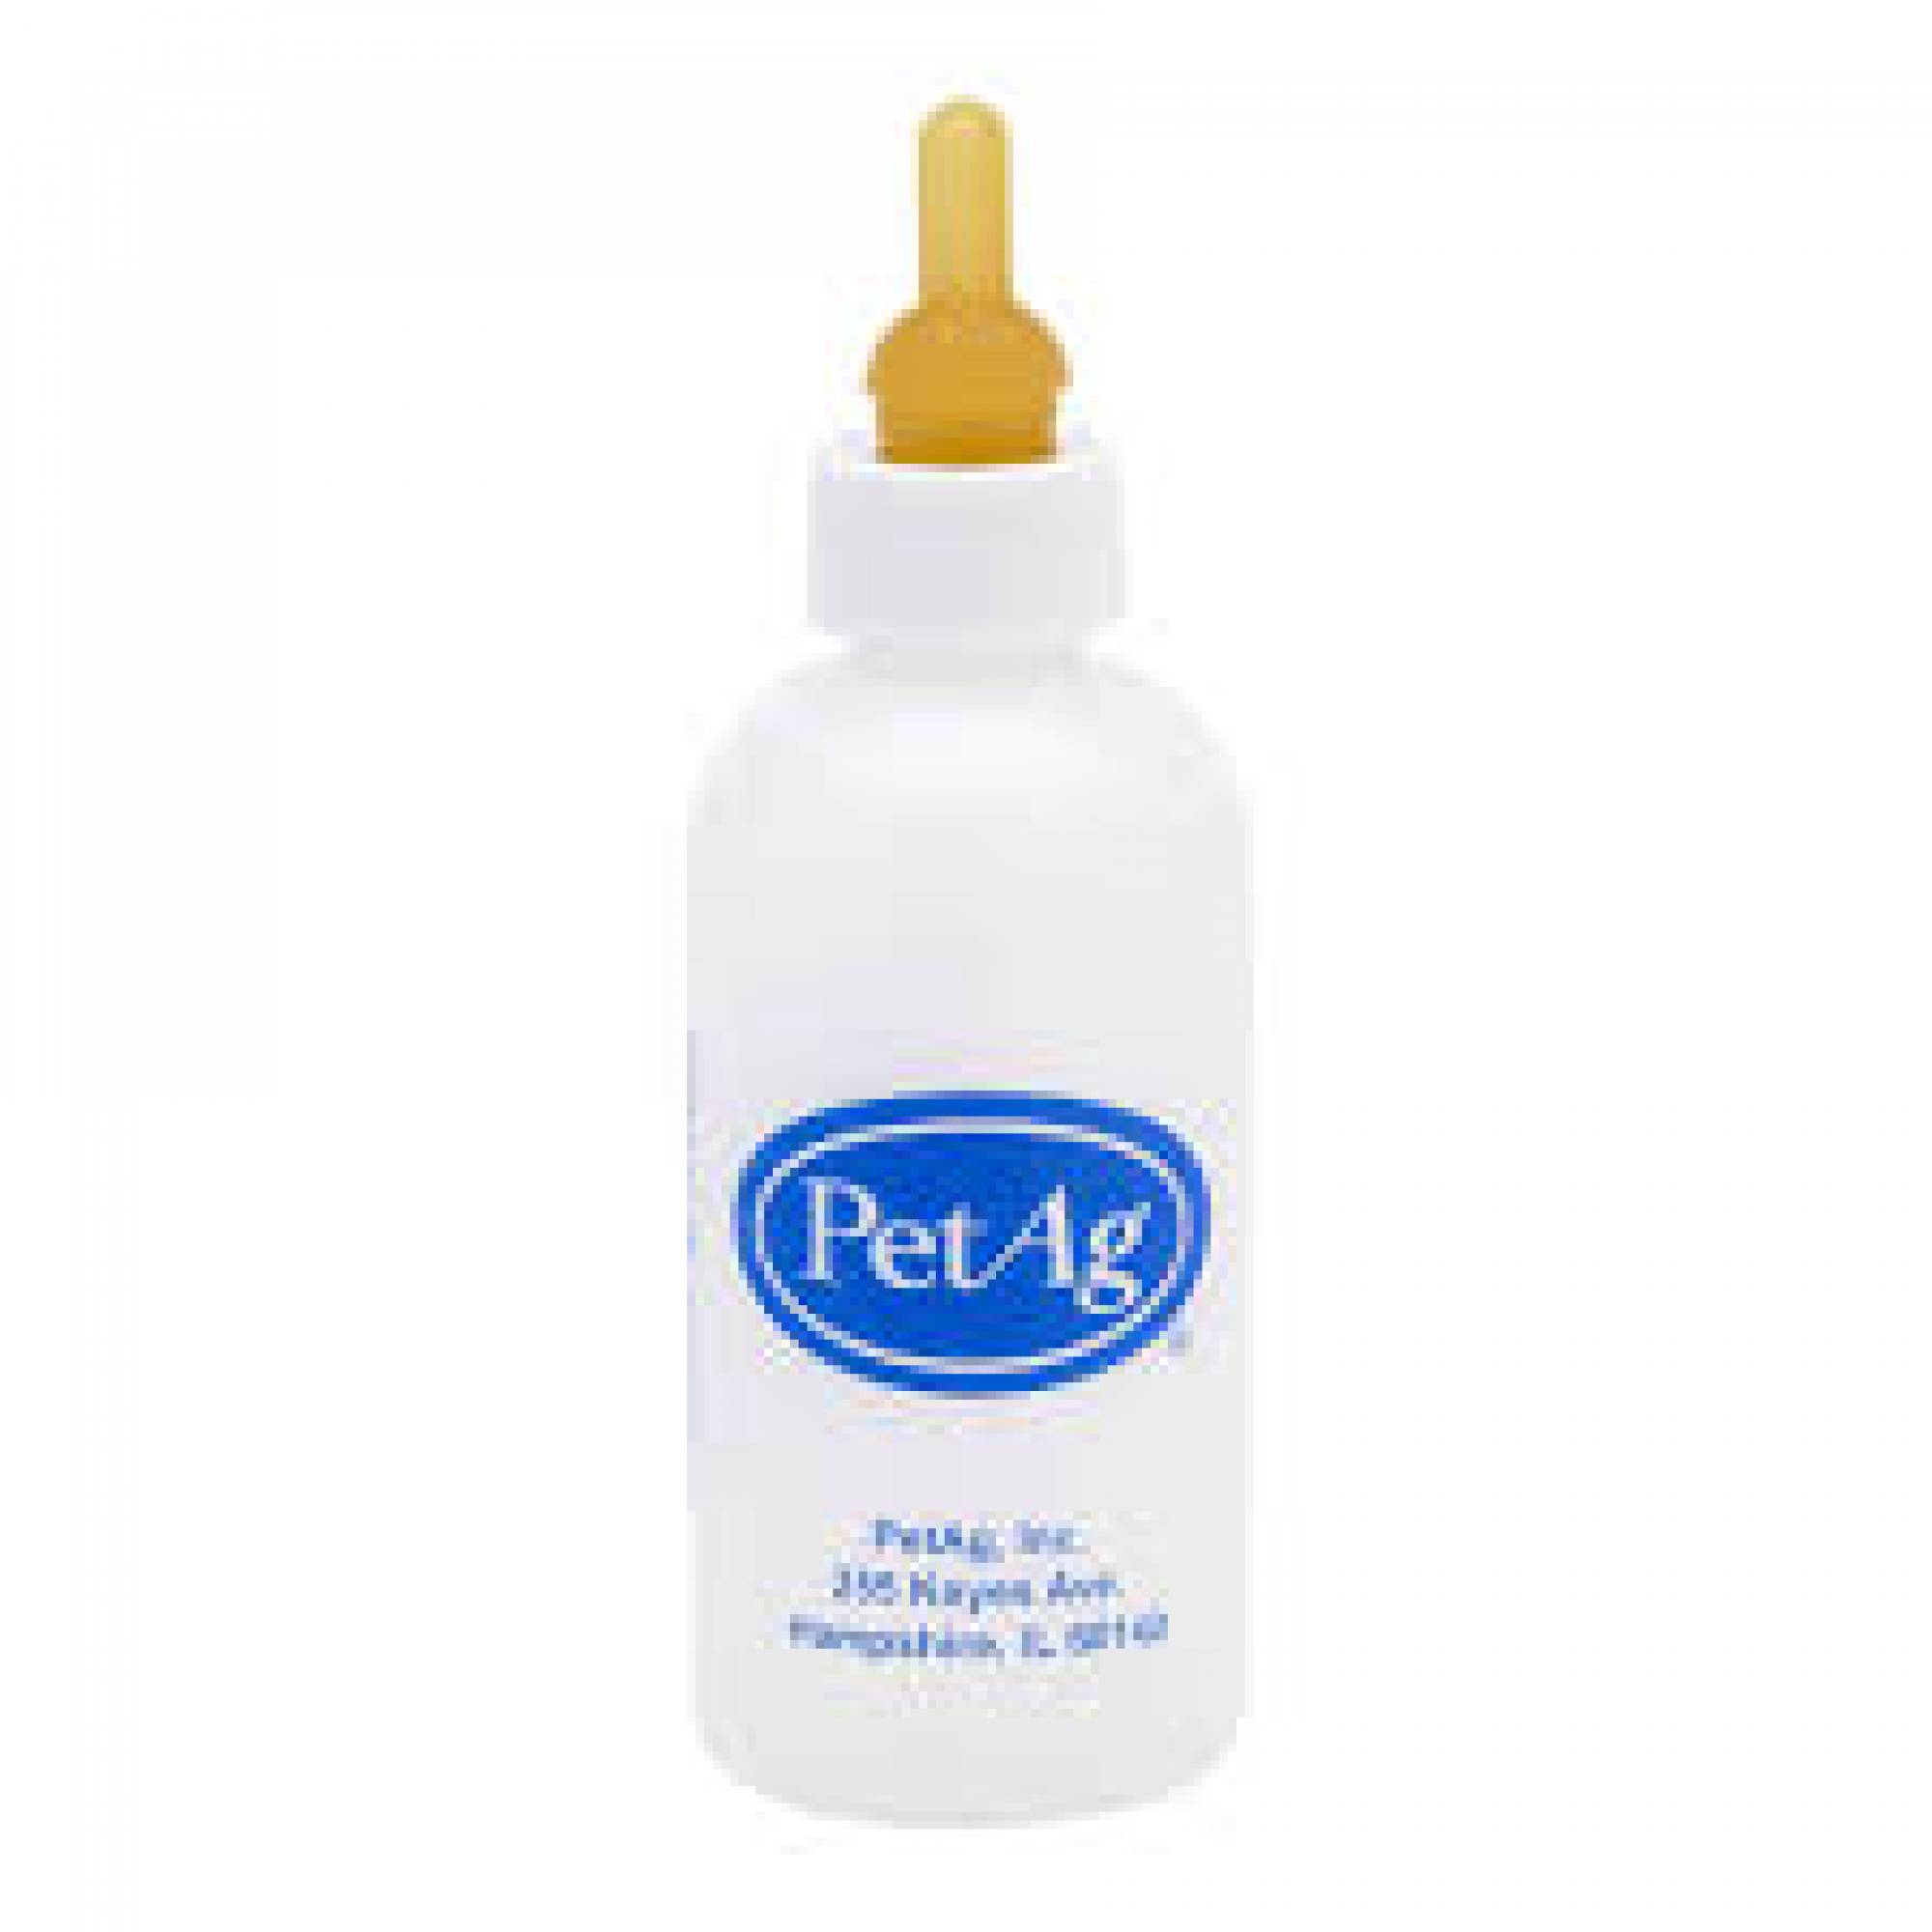 PetAg Nurser Bottle 2oz